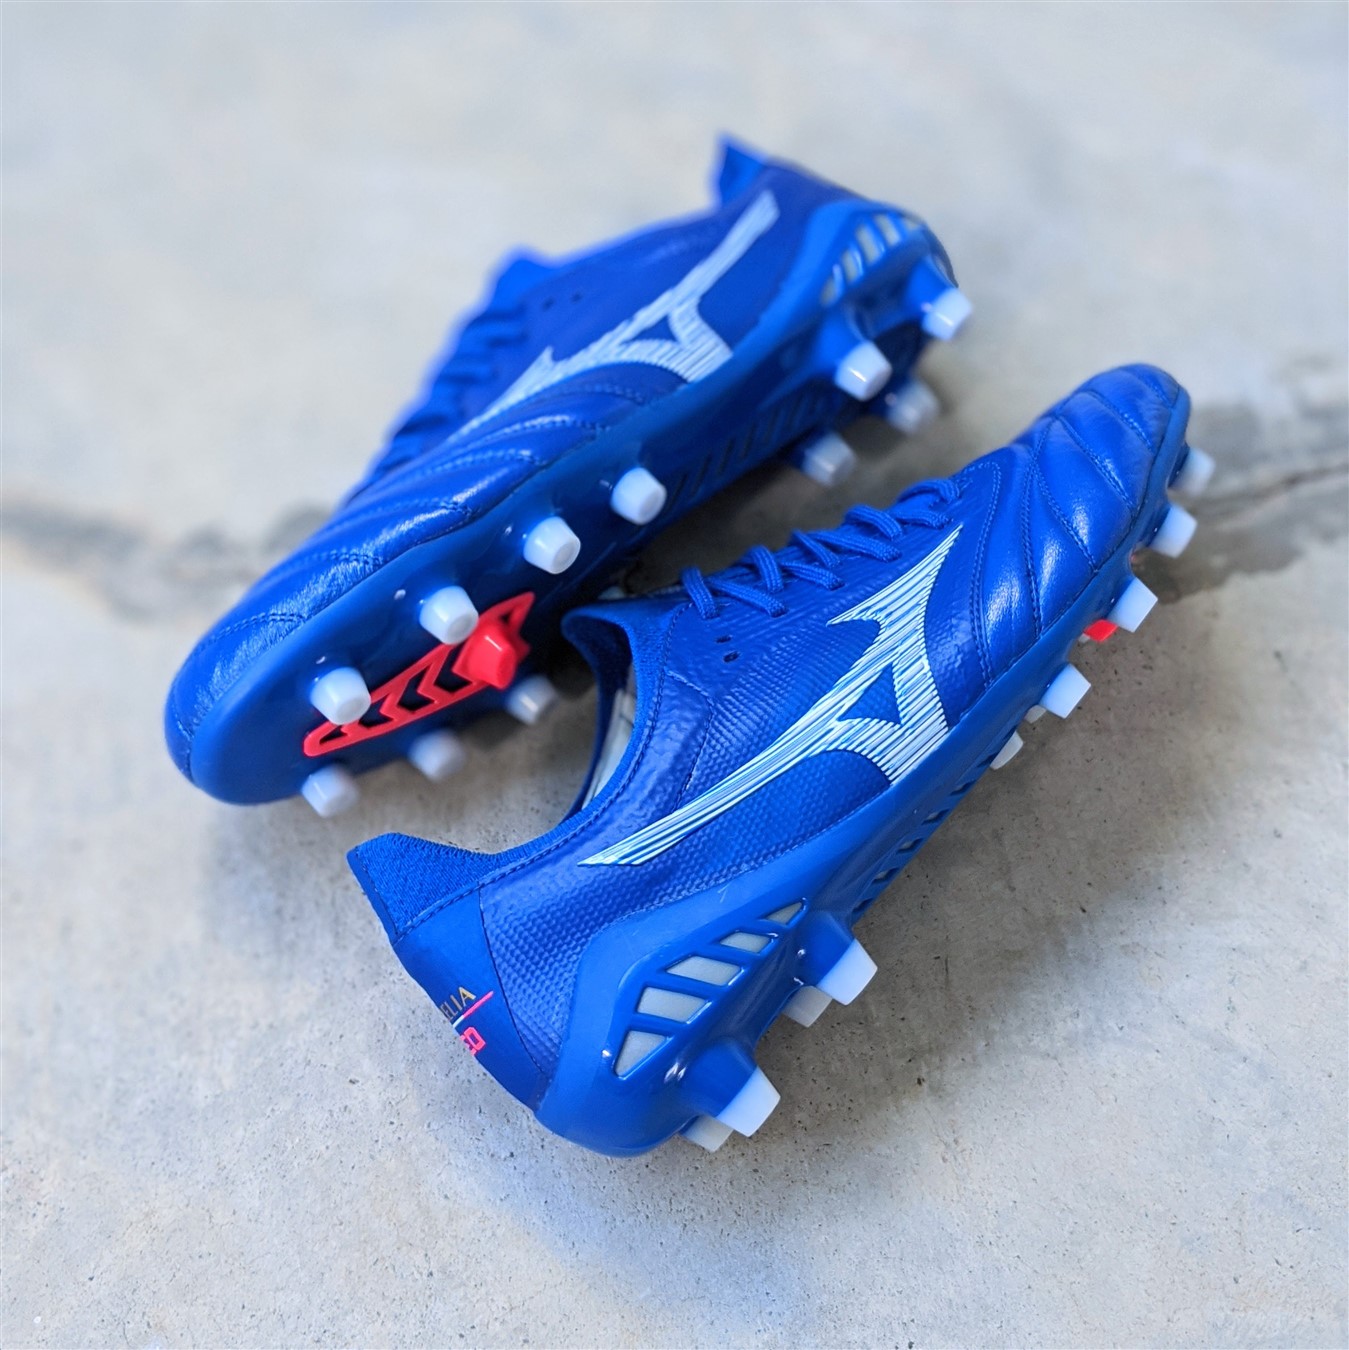 Footbal boots upgrade - Mizuno Morelia Neo 3 Beta Japan review football boots soccer cleats